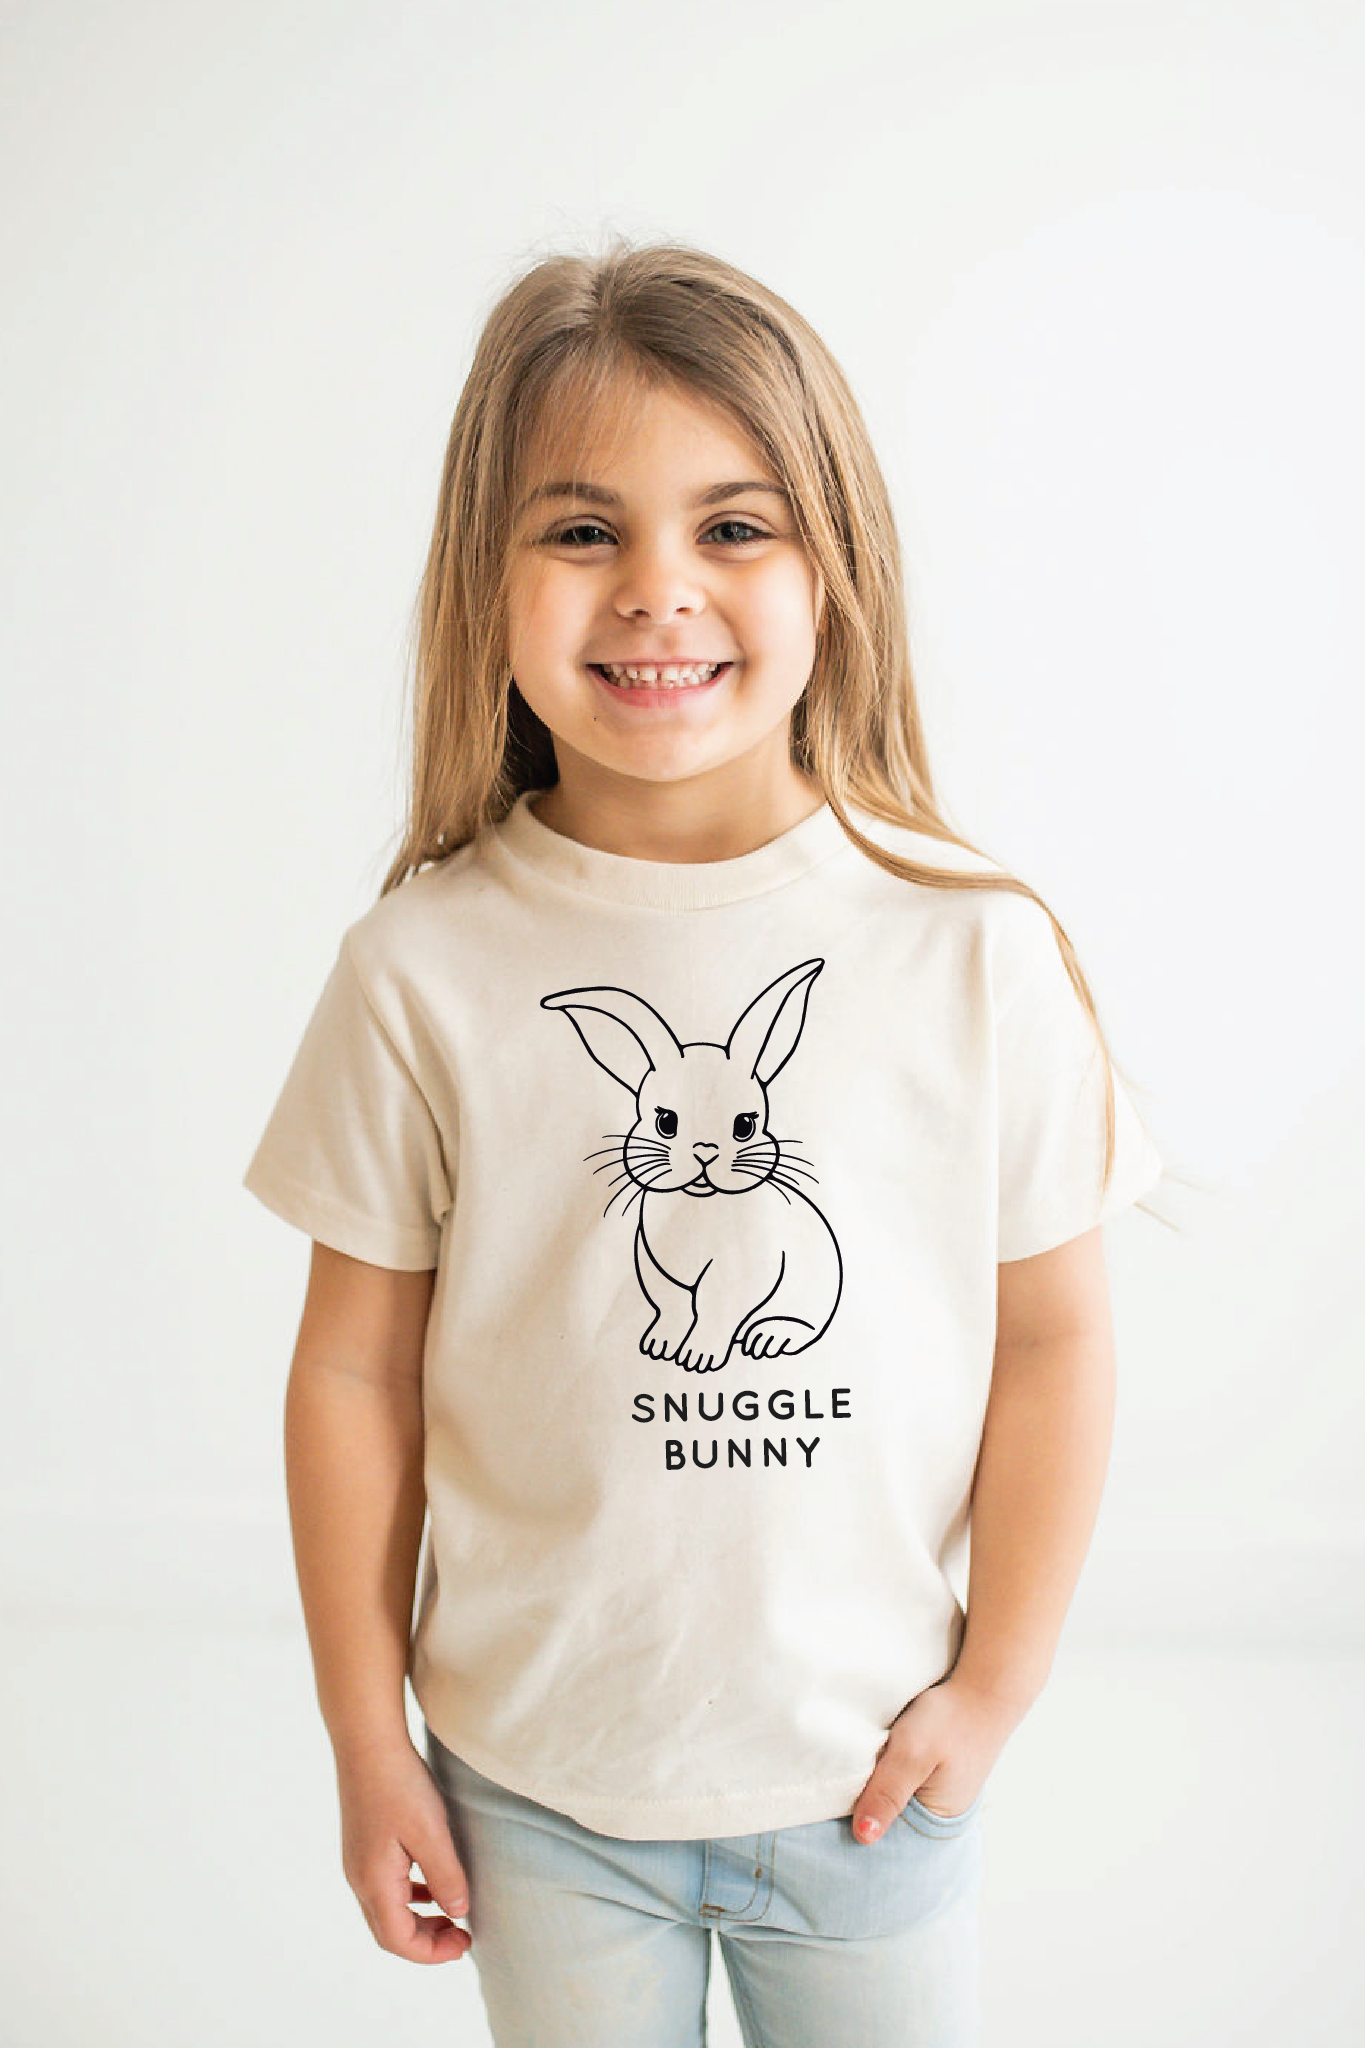 Snuggle Bunny Shirt - Kids